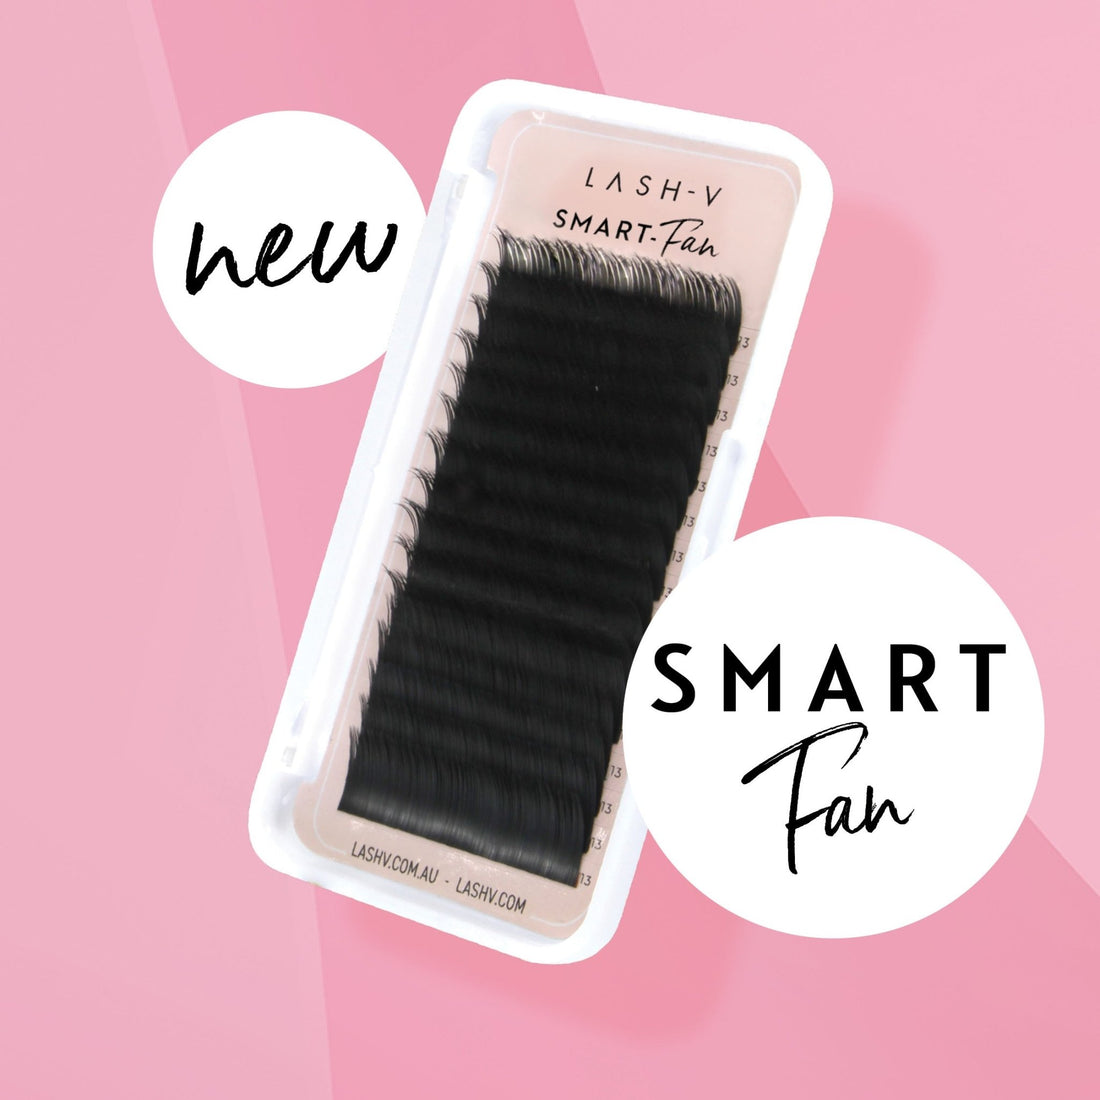 Smart-Fan lashes - Mix Tray - LASH V